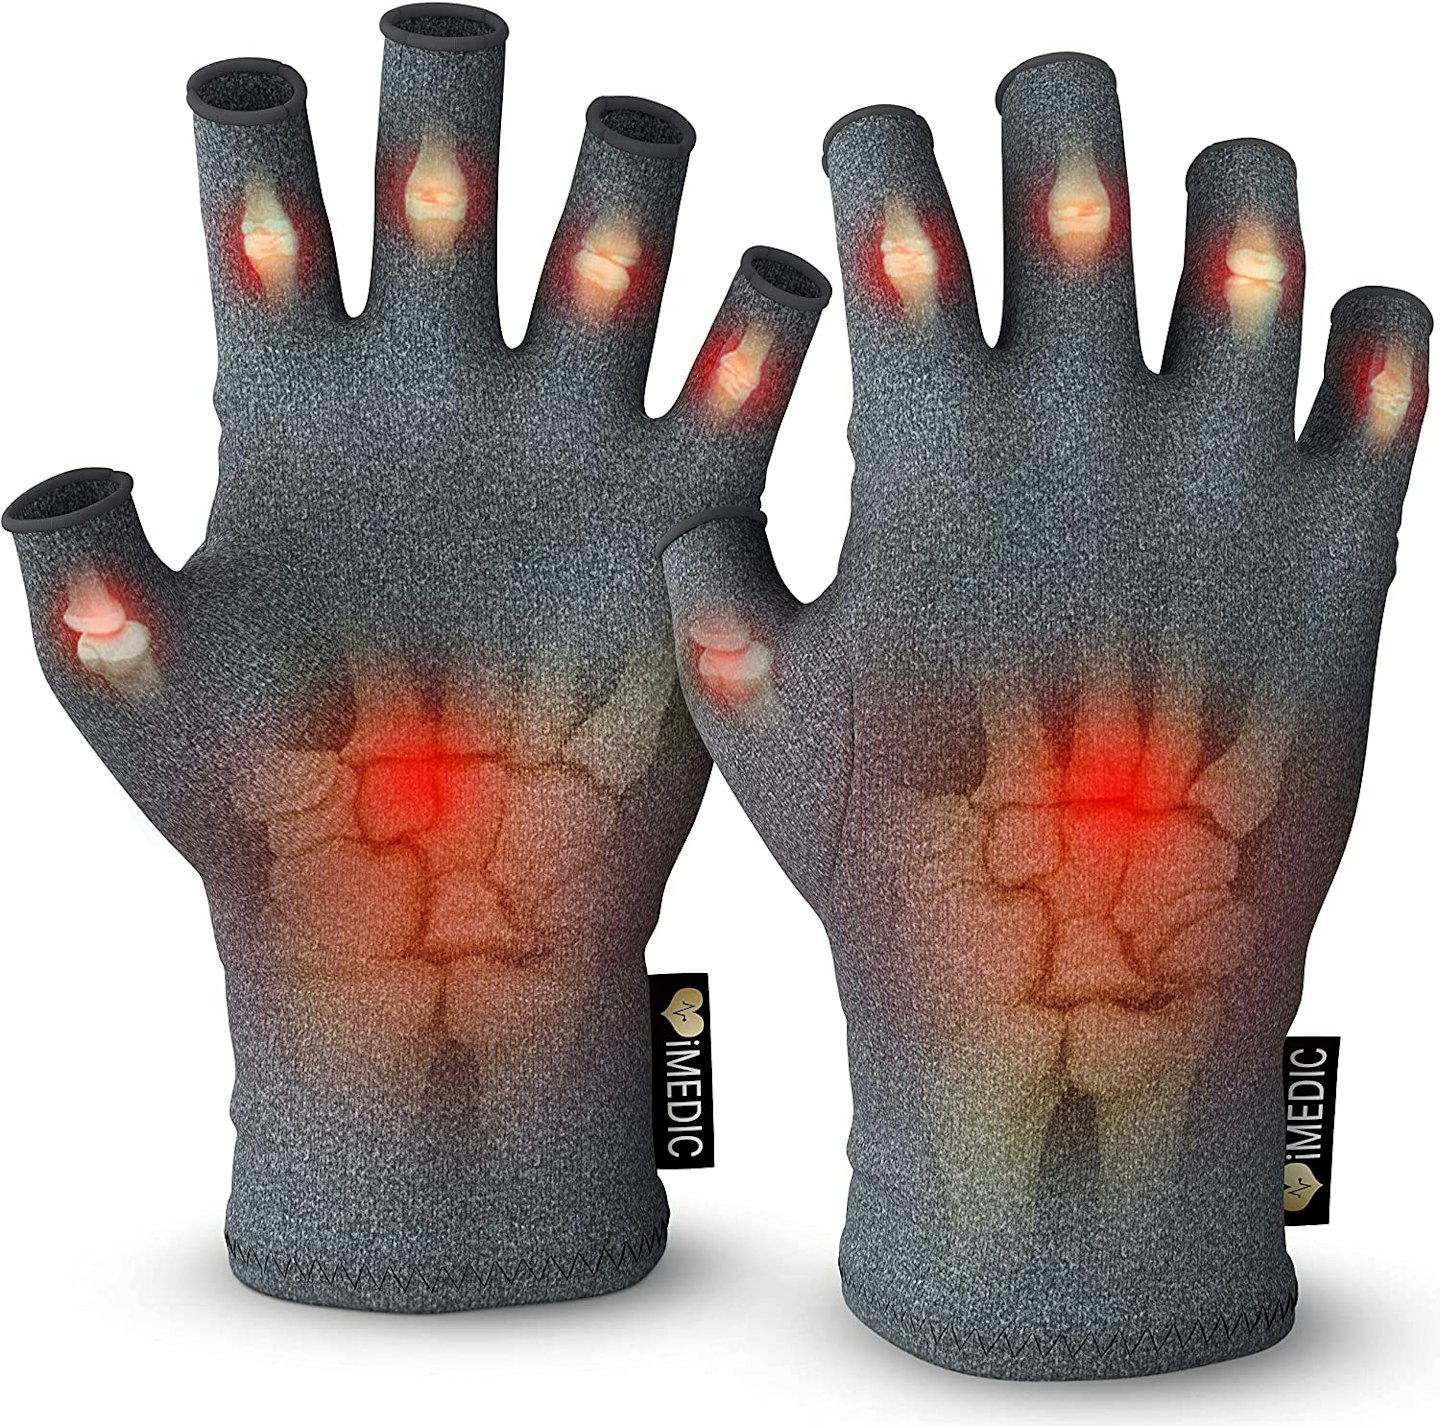 iMedic Arthritis Gloves